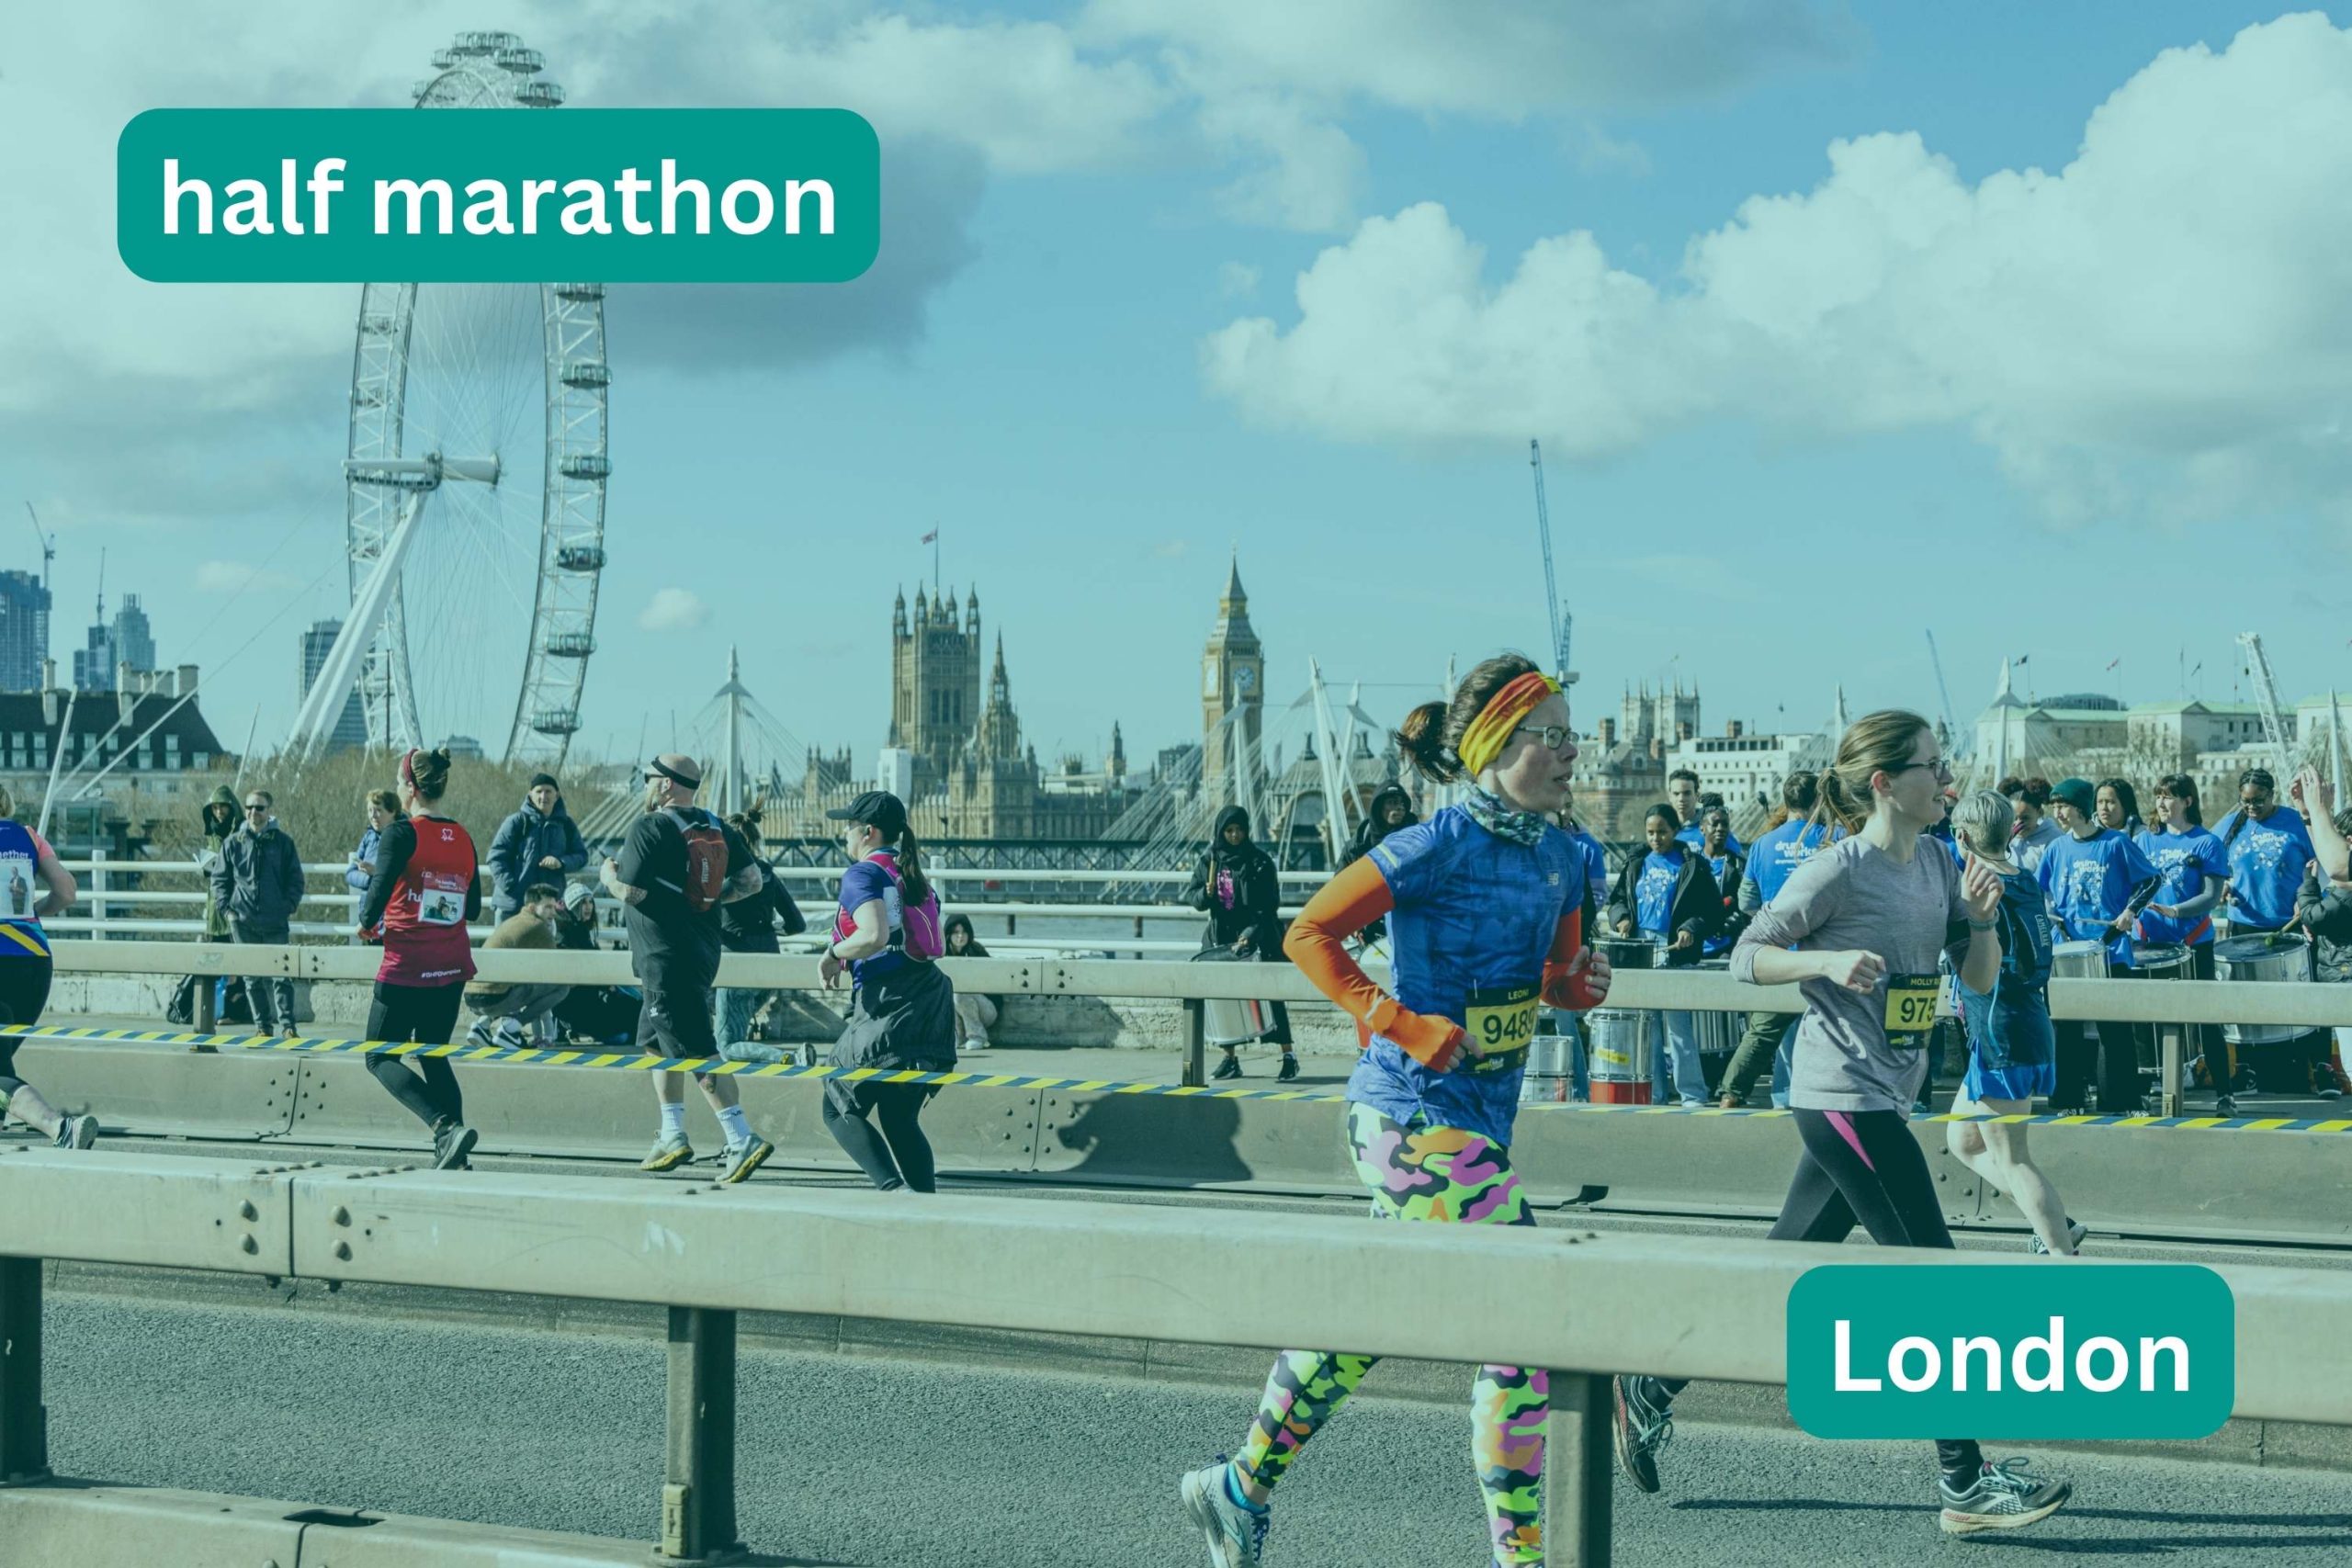 woman running across bridge in London with London eye in the background. title text: Half marathon, London